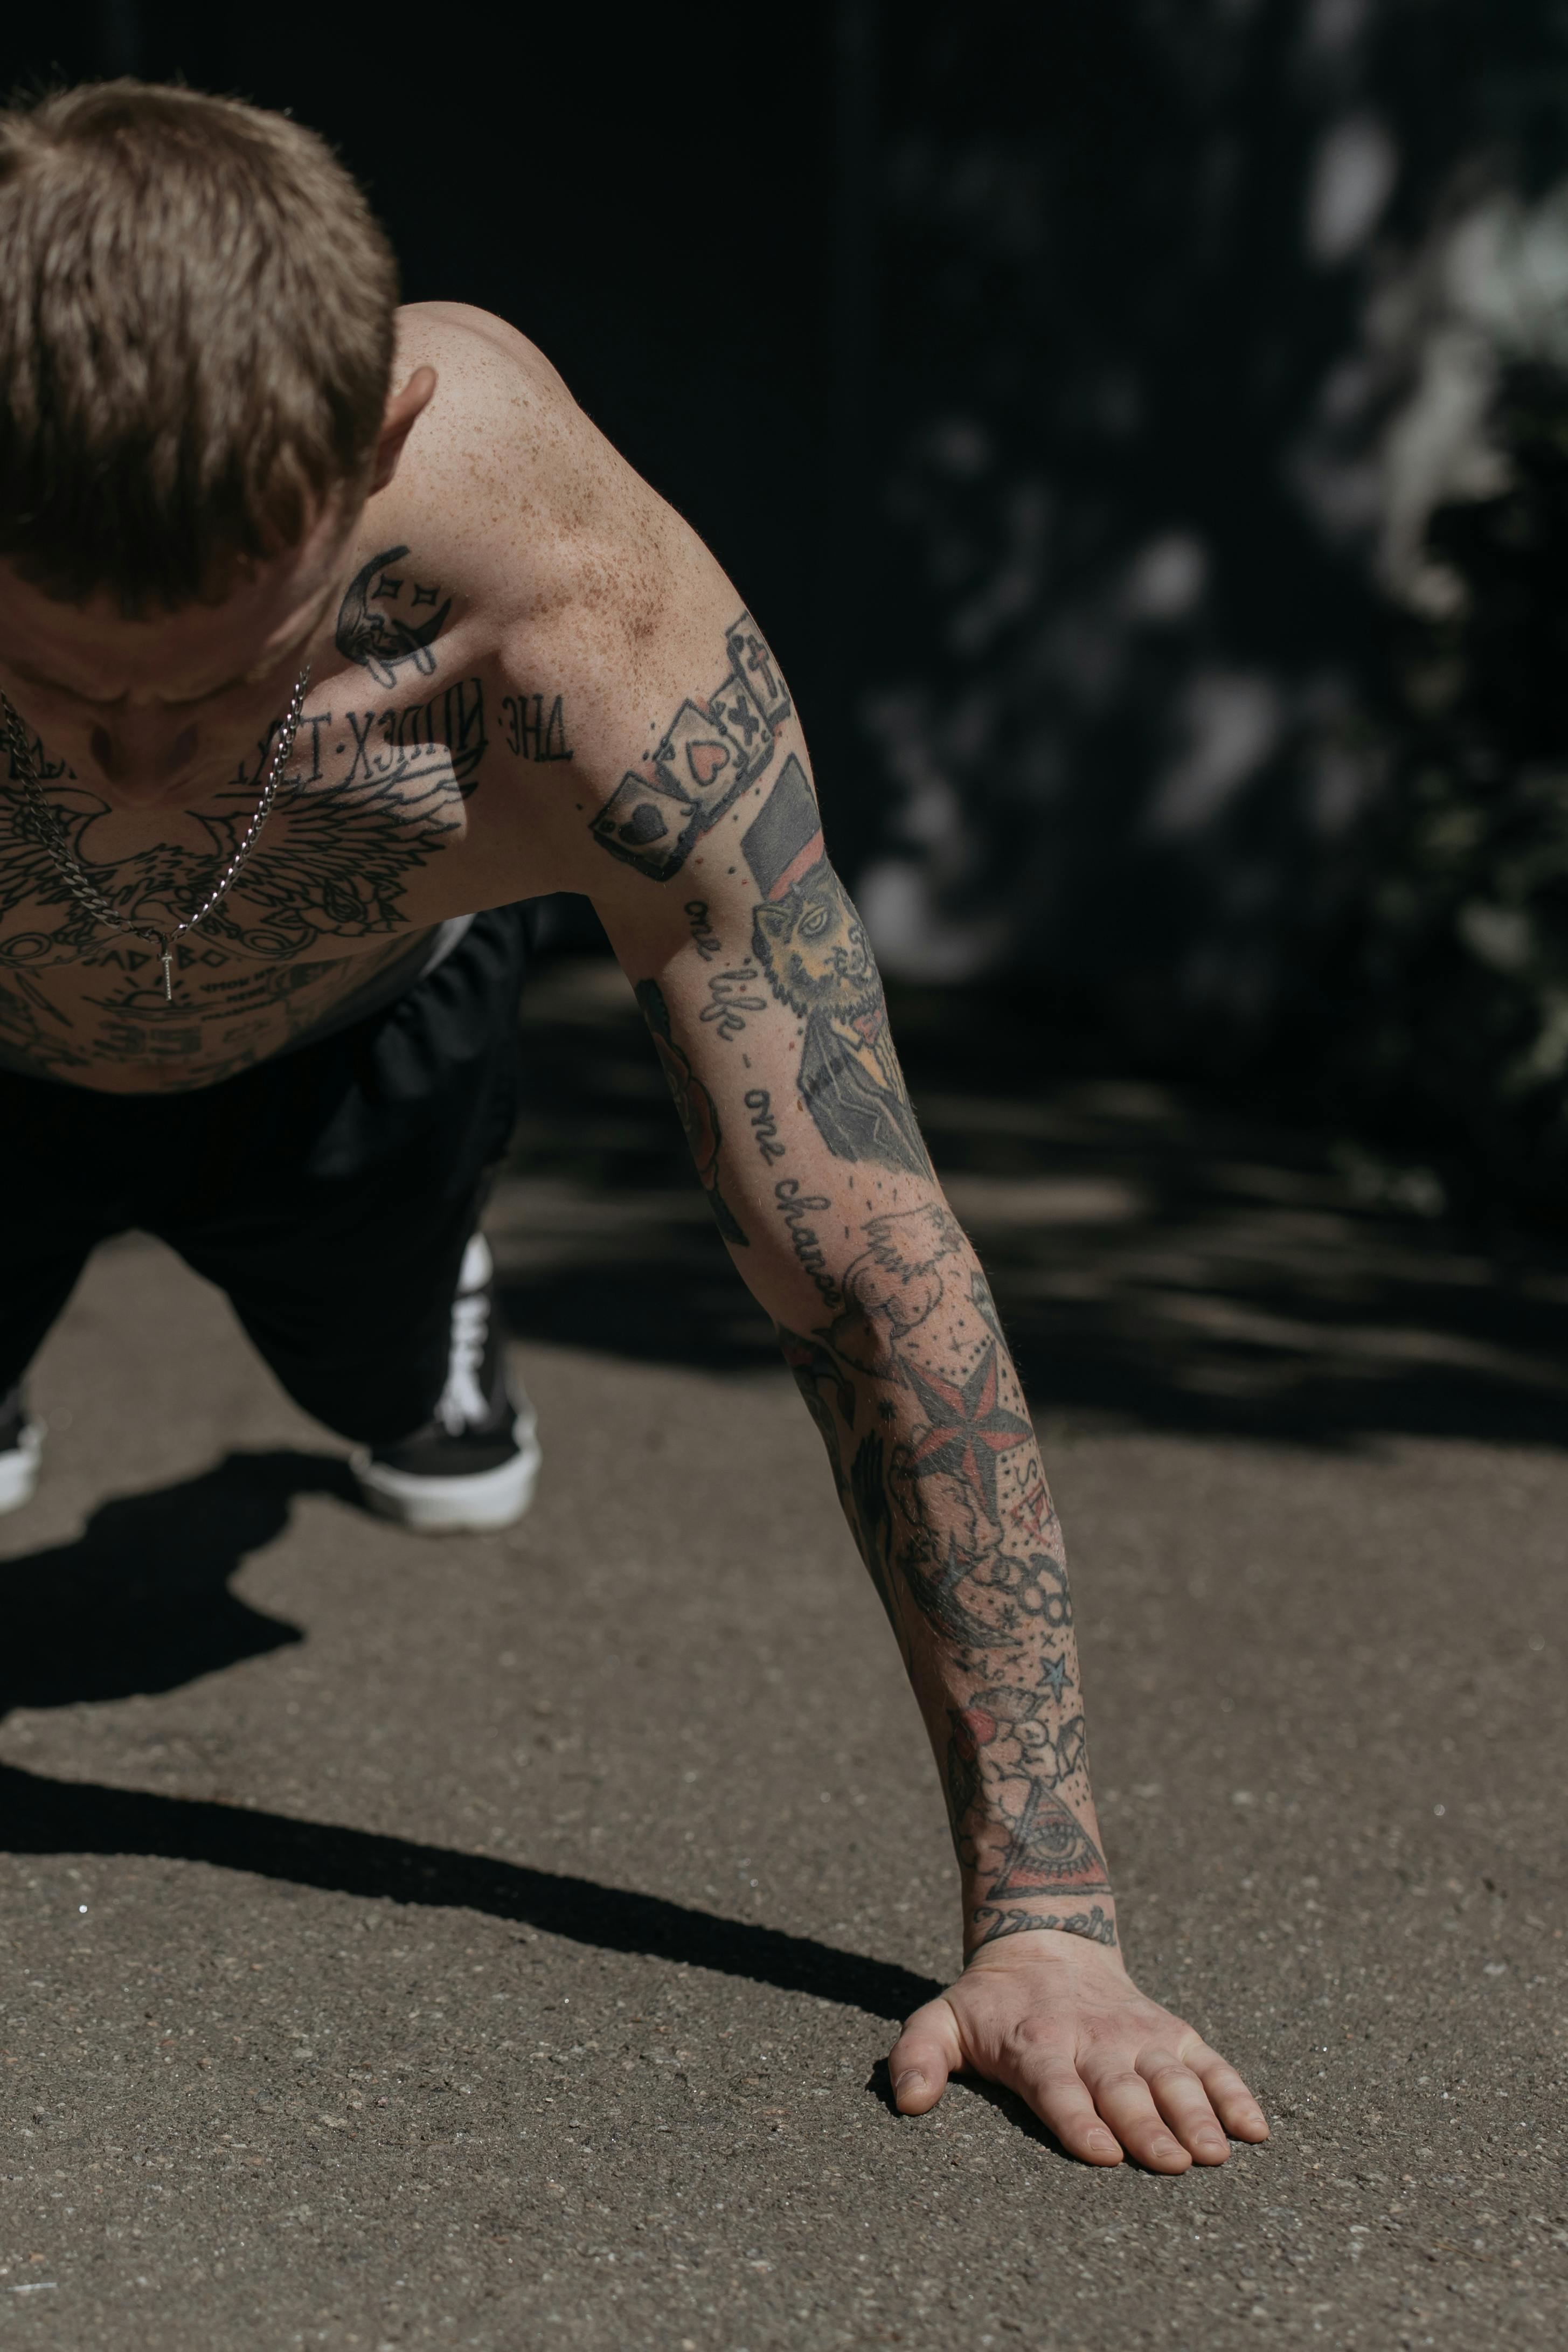 Tattoo Man Doing Push Ups Green Screen (, Stock Video